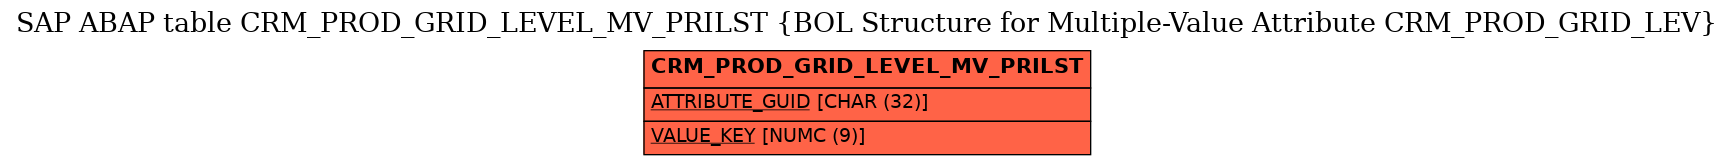 E-R Diagram for table CRM_PROD_GRID_LEVEL_MV_PRILST (BOL Structure for Multiple-Value Attribute CRM_PROD_GRID_LEV)